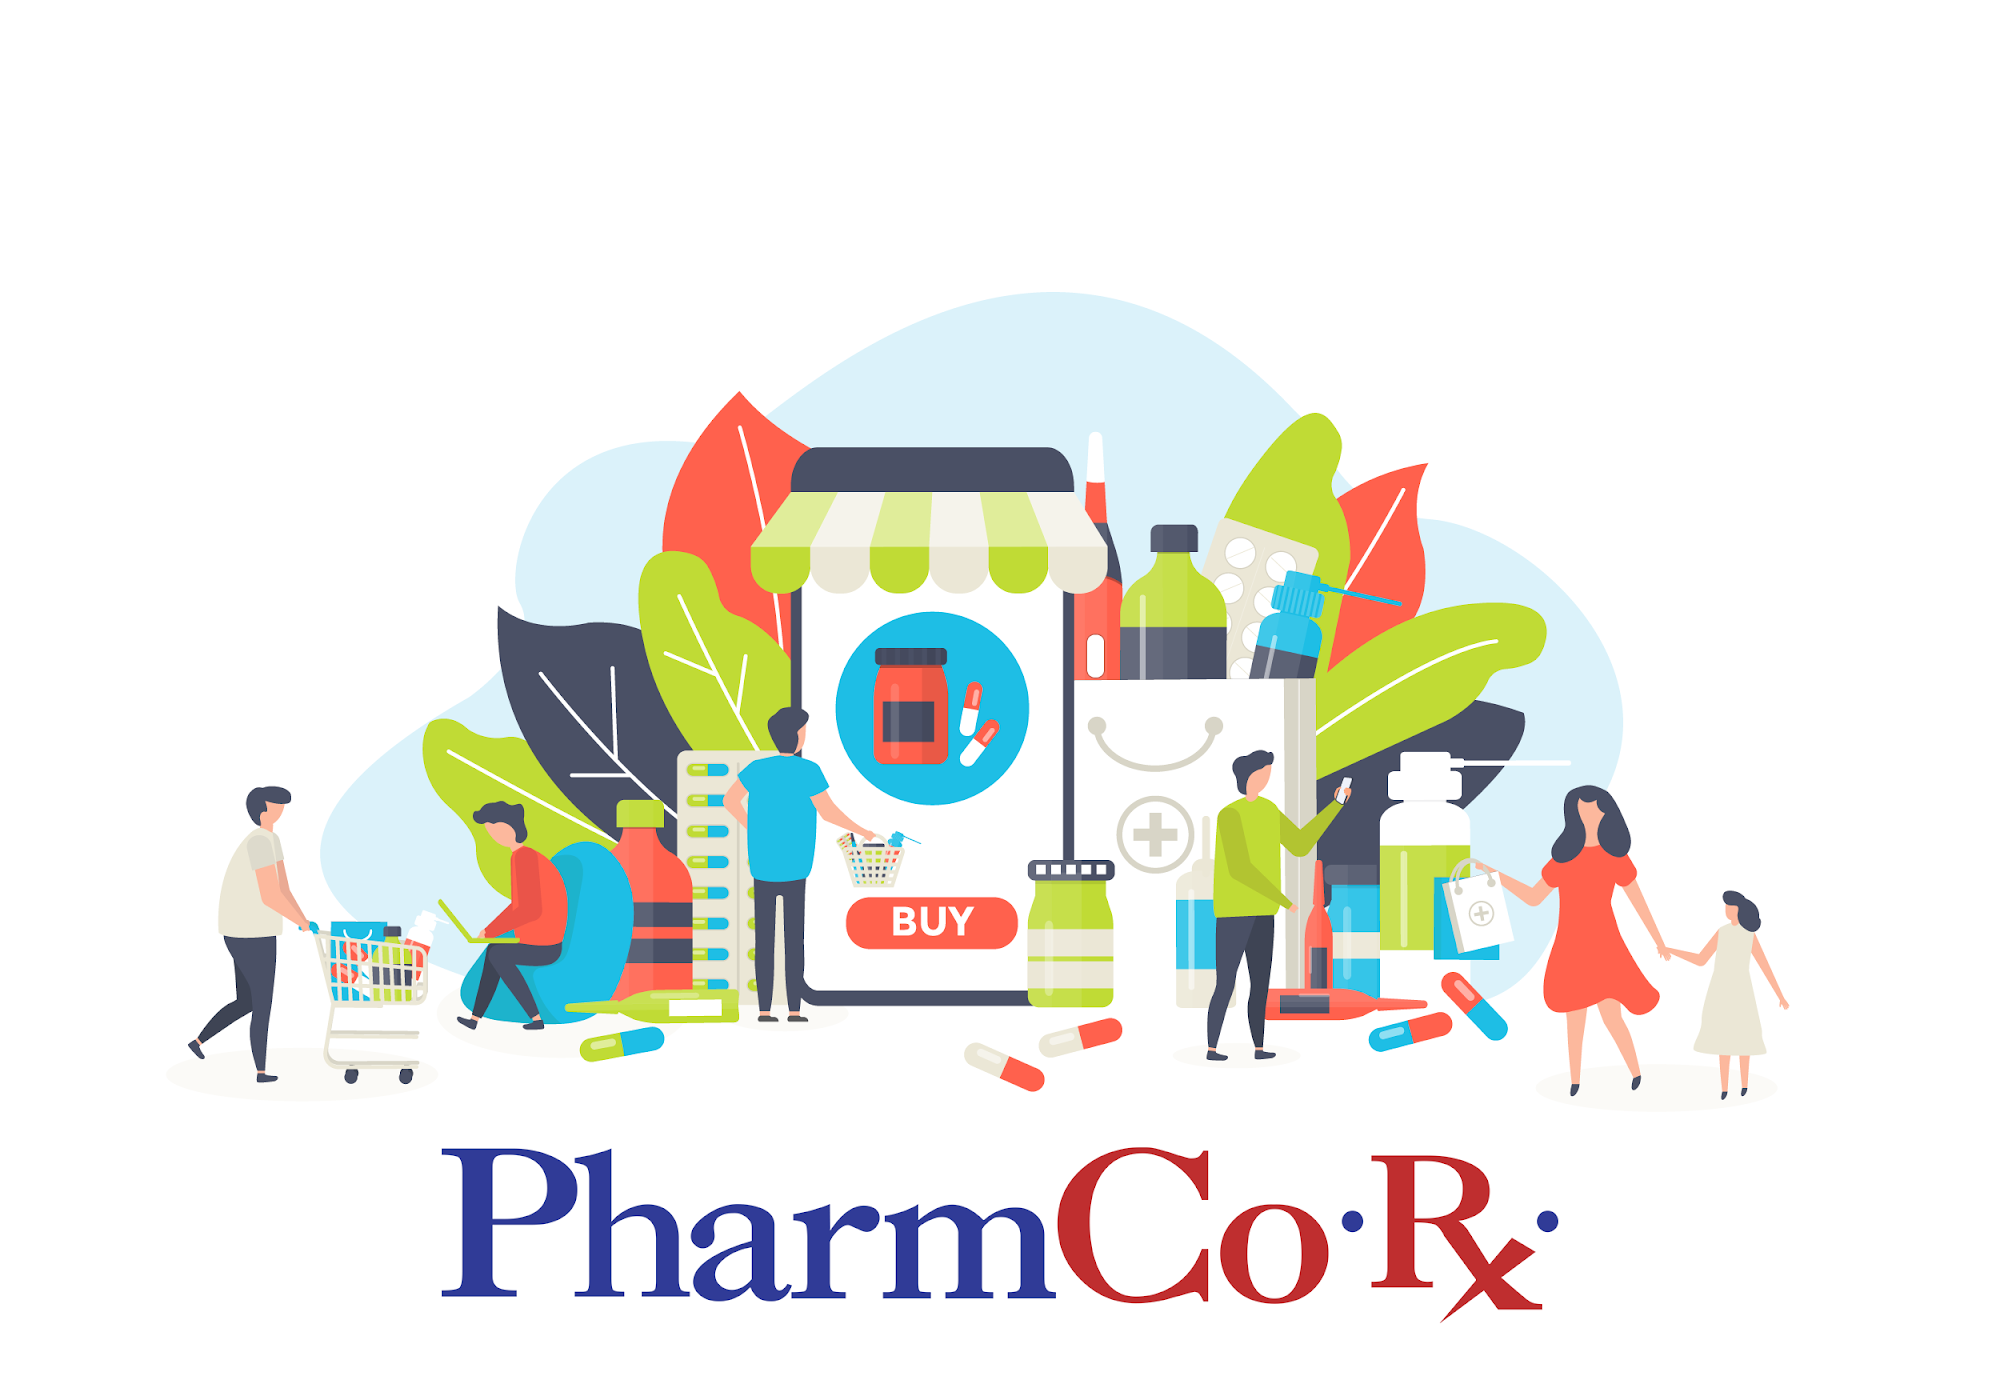 PharmcoRx Pharmacy Palm Beach